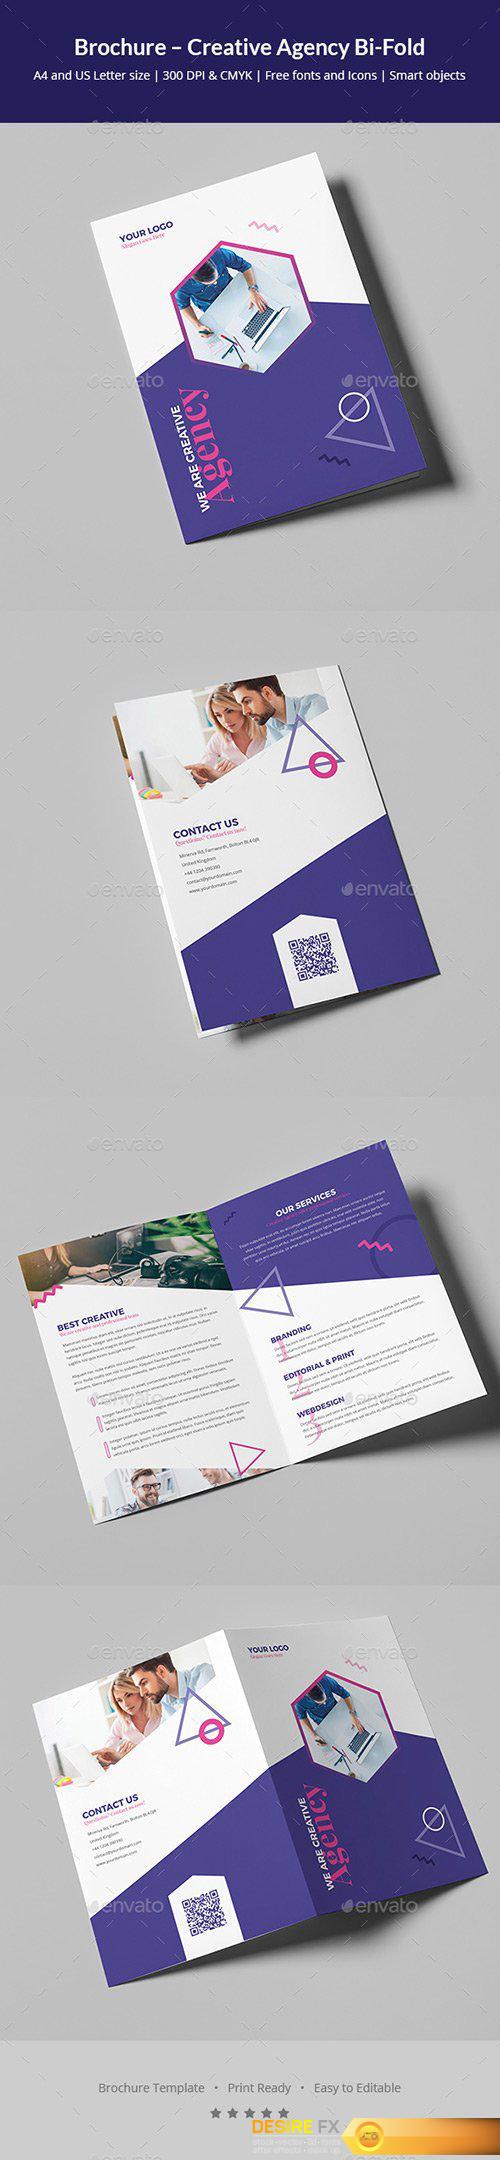 Graphicriver - Brochure – Creative Agency Bi-Fold 20777303